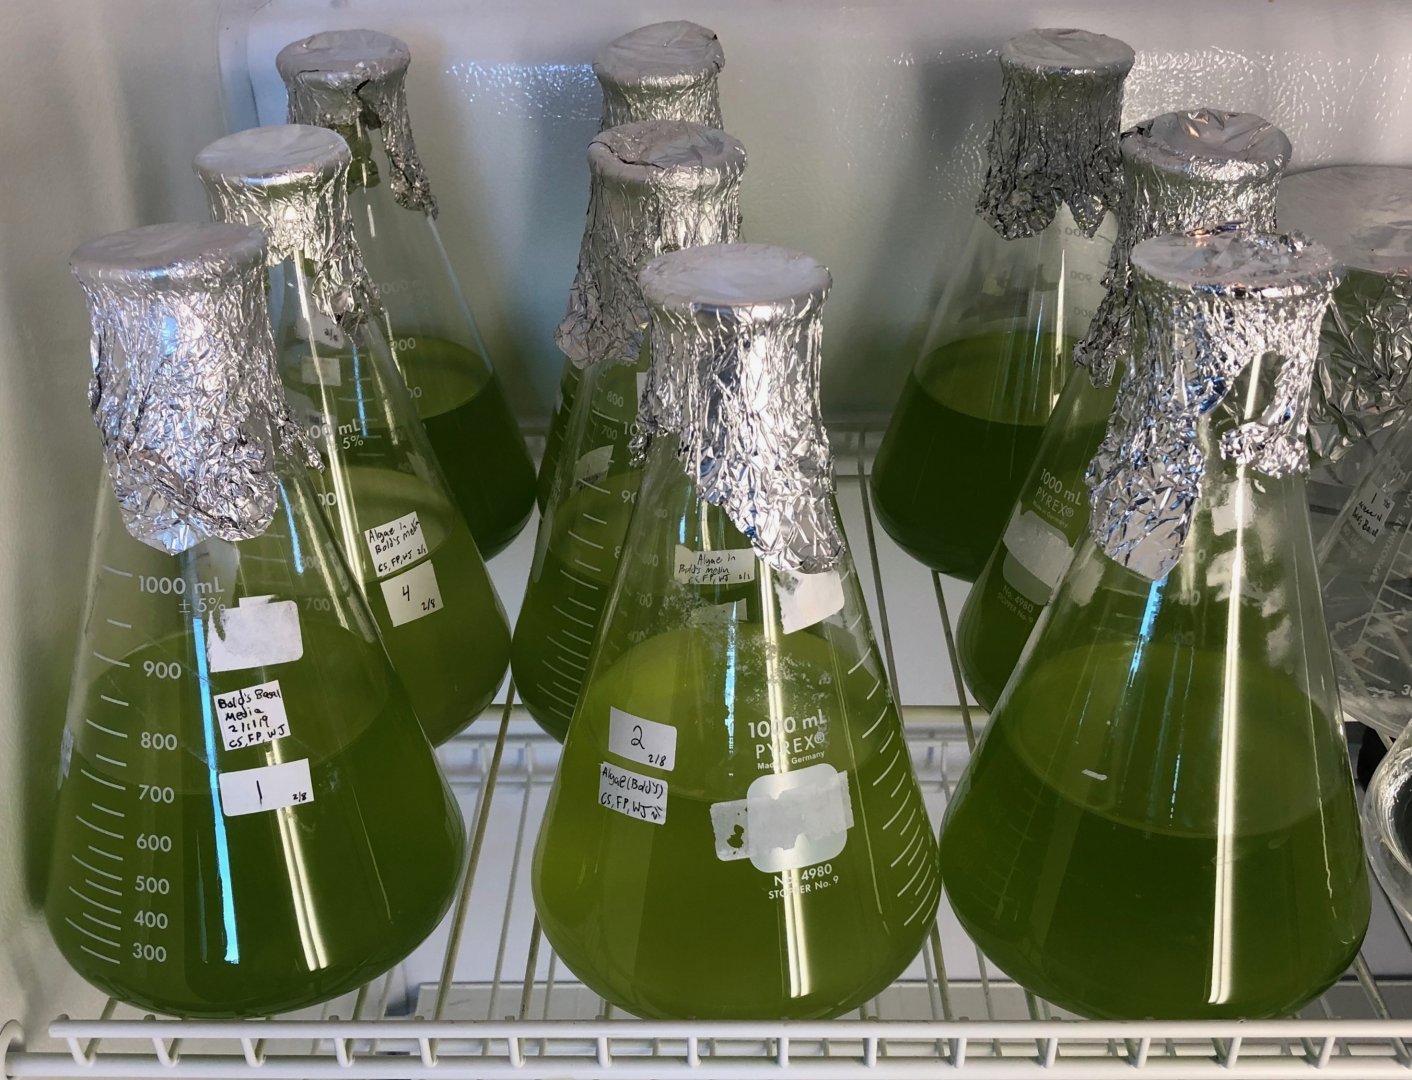 Algae growing in incubator.